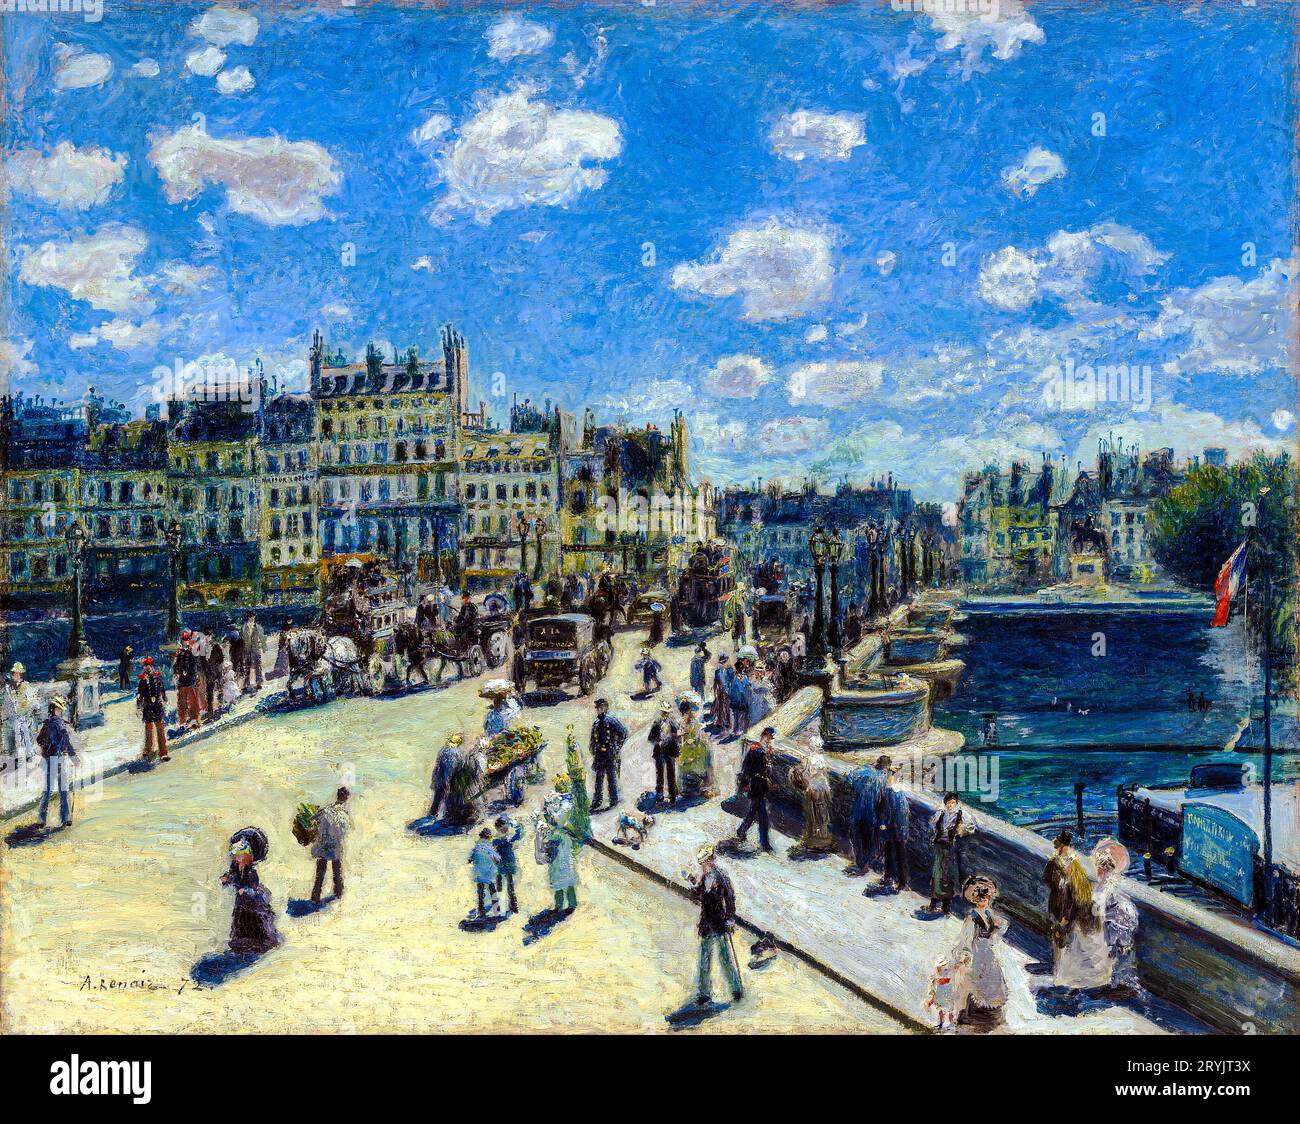 File:Louis Vuitton Foundation, Monet sketch.jpg - Wikipedia